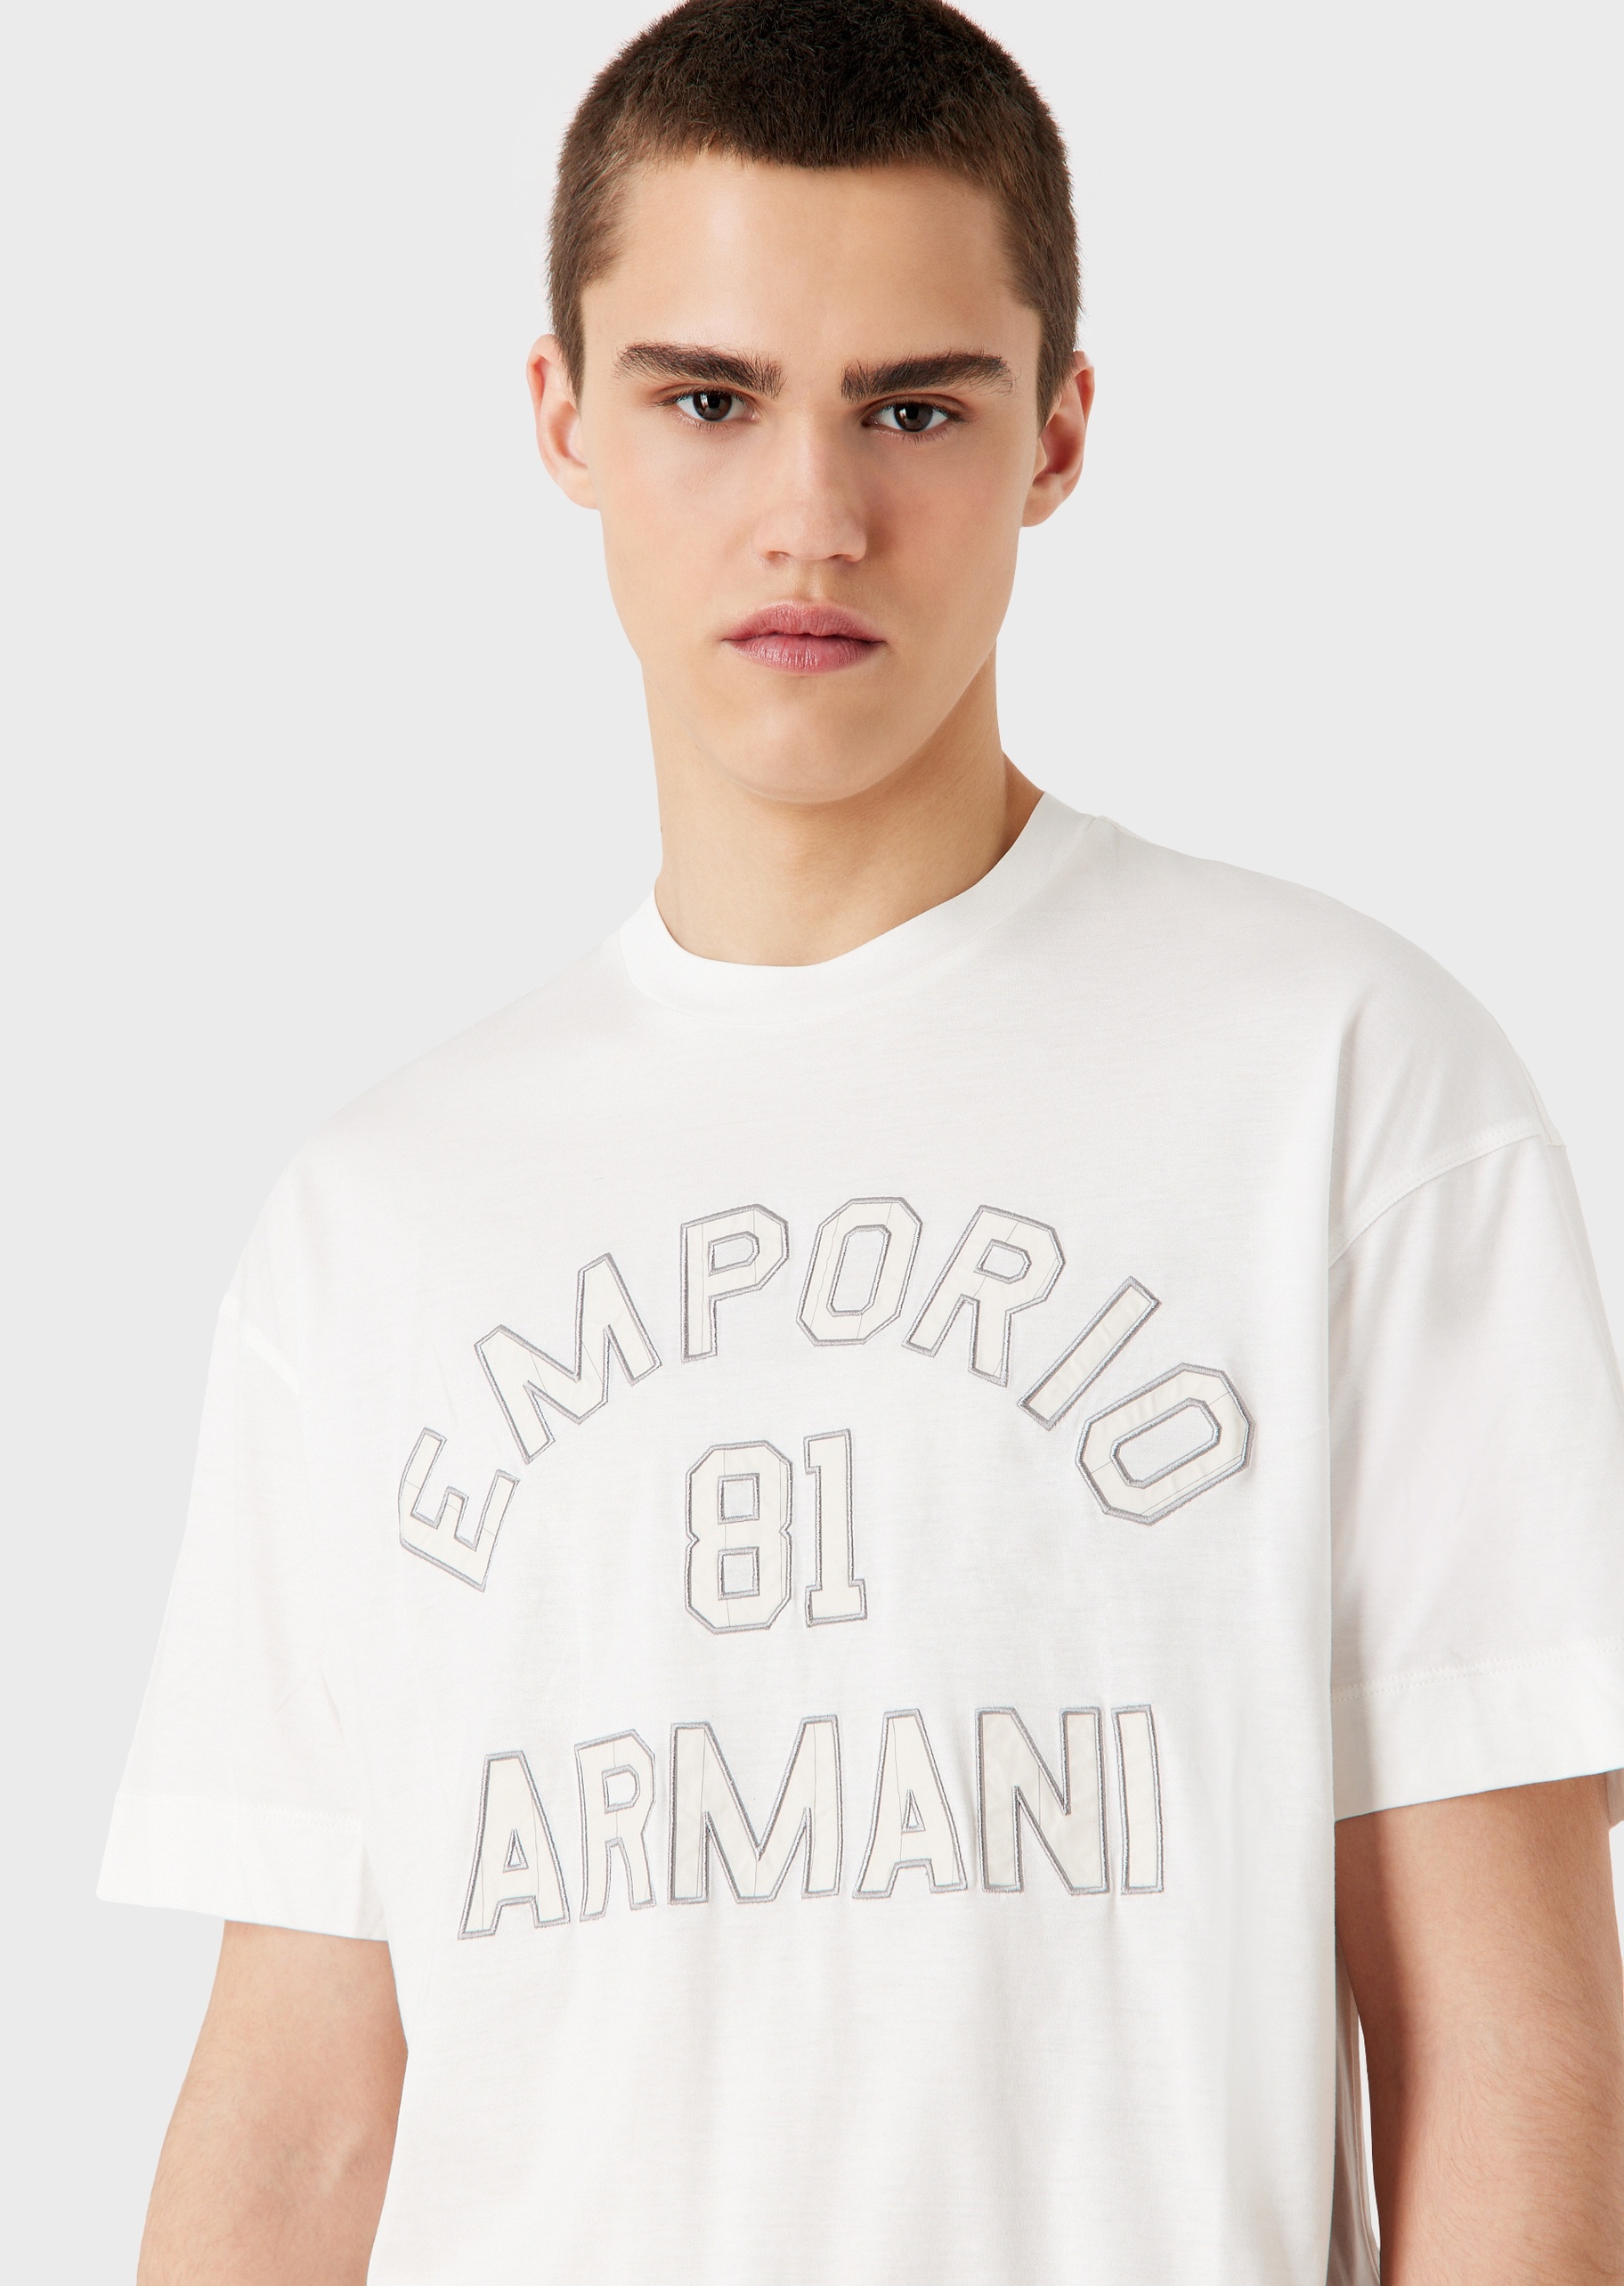 Emporio Armani 男士撞色刺绣圆领短袖T恤